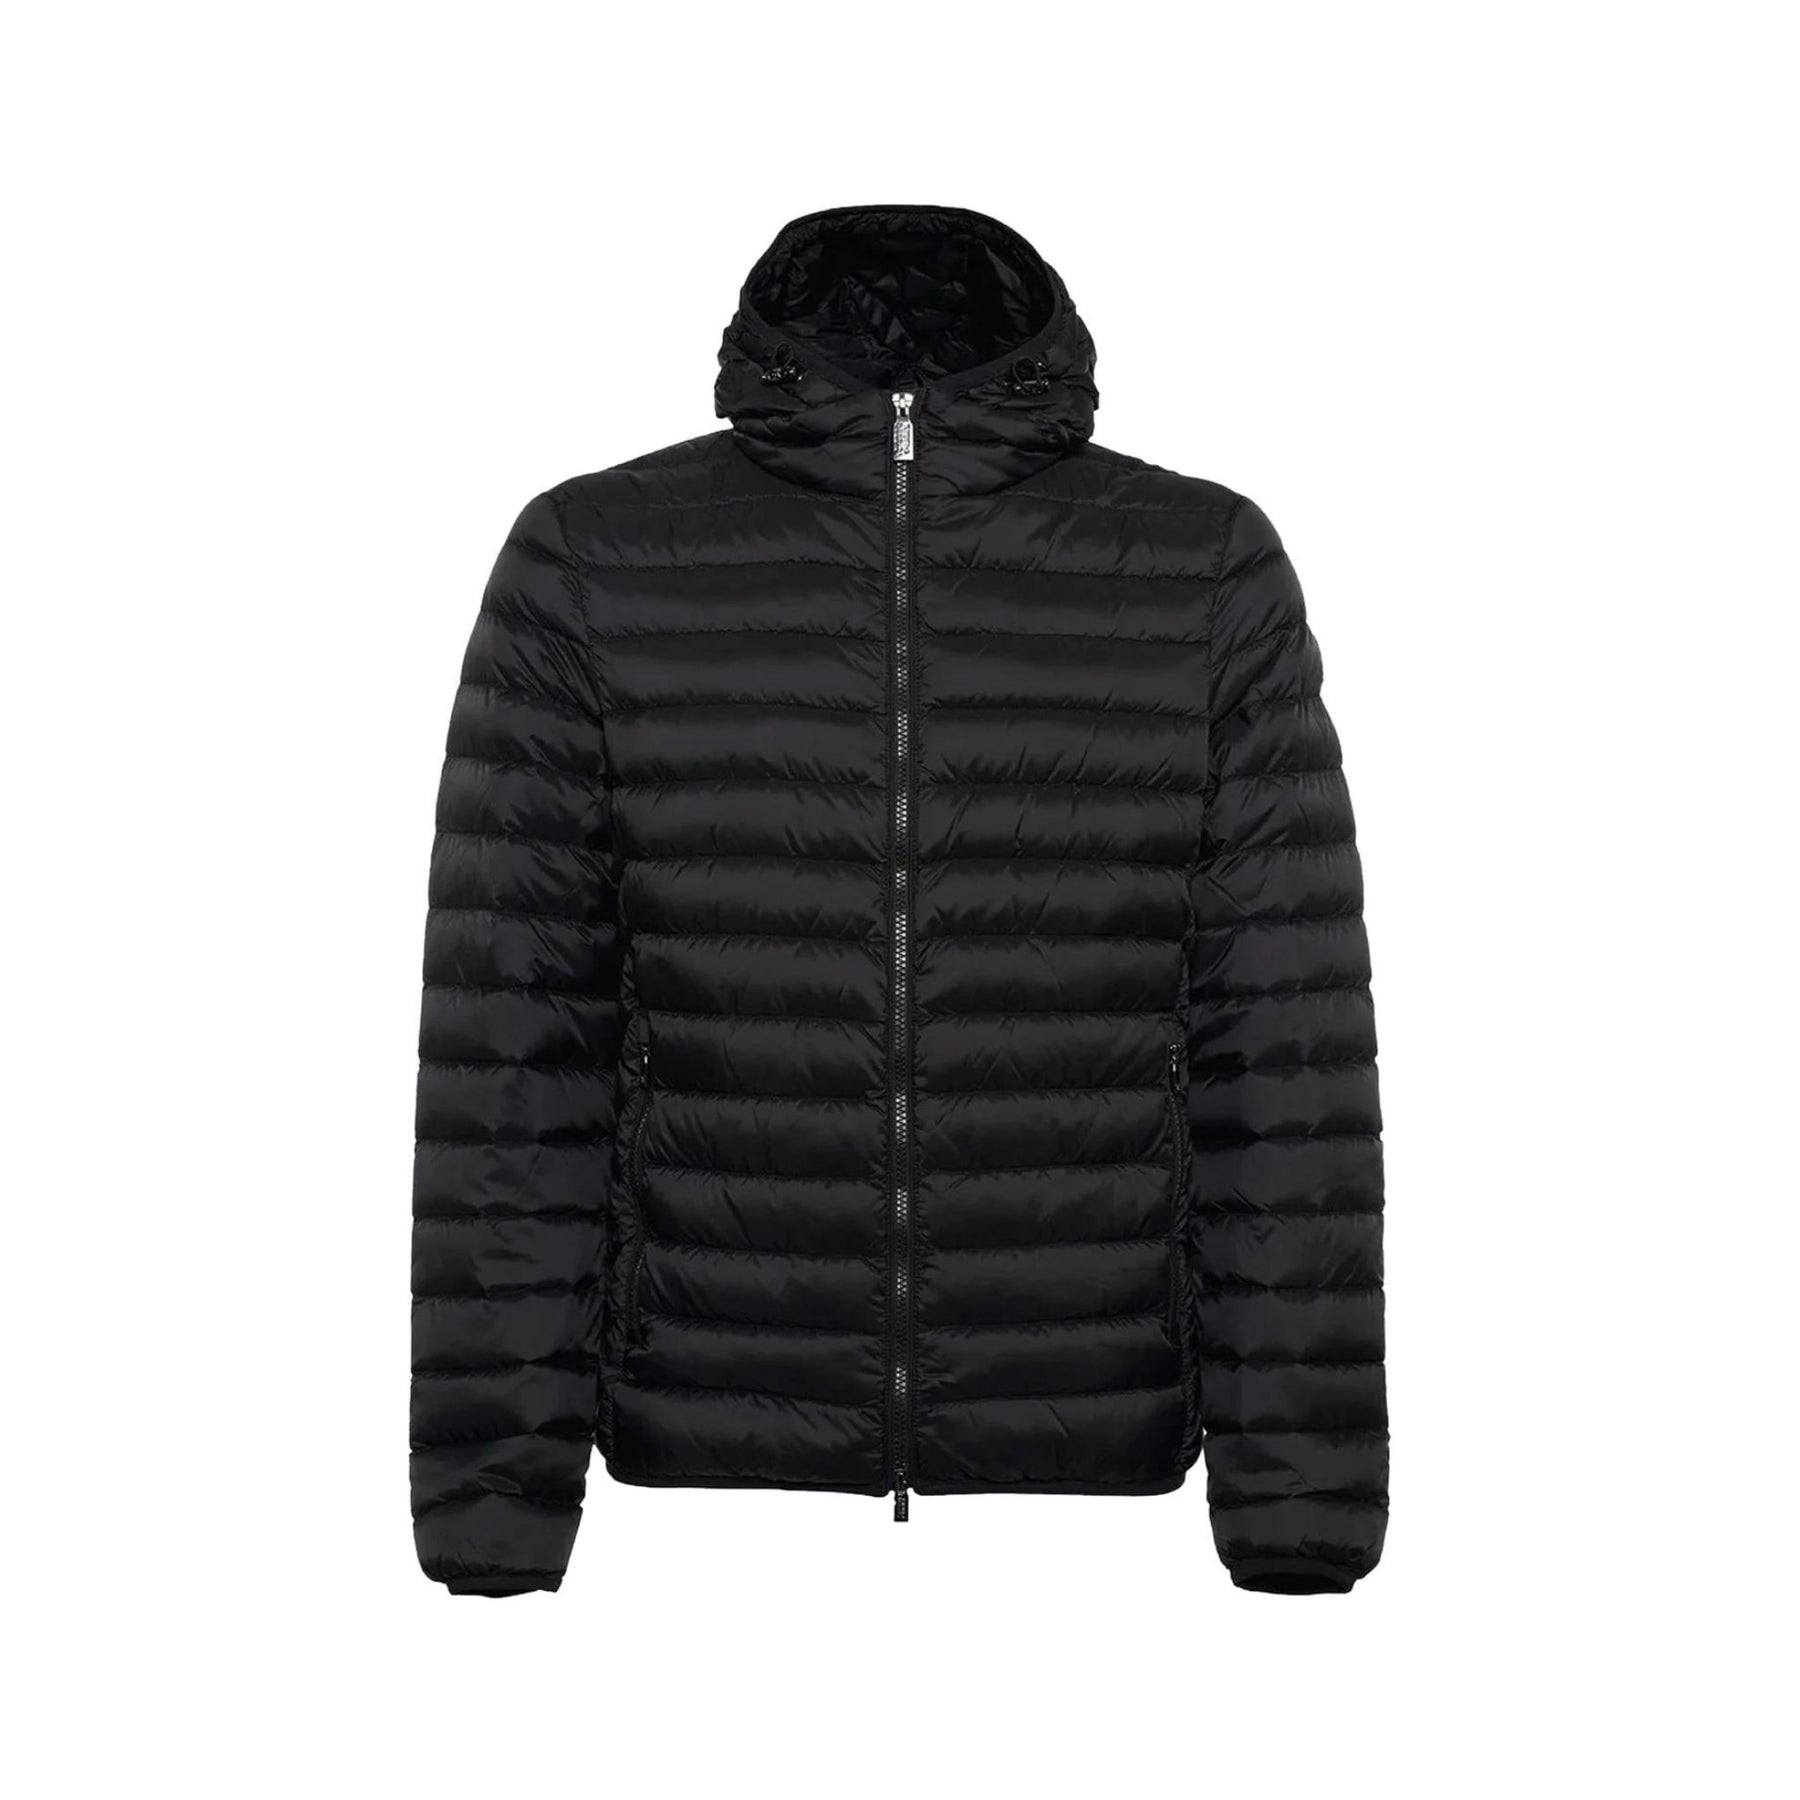 men's-winter-jacket-short-down-jacket-ciesse-black